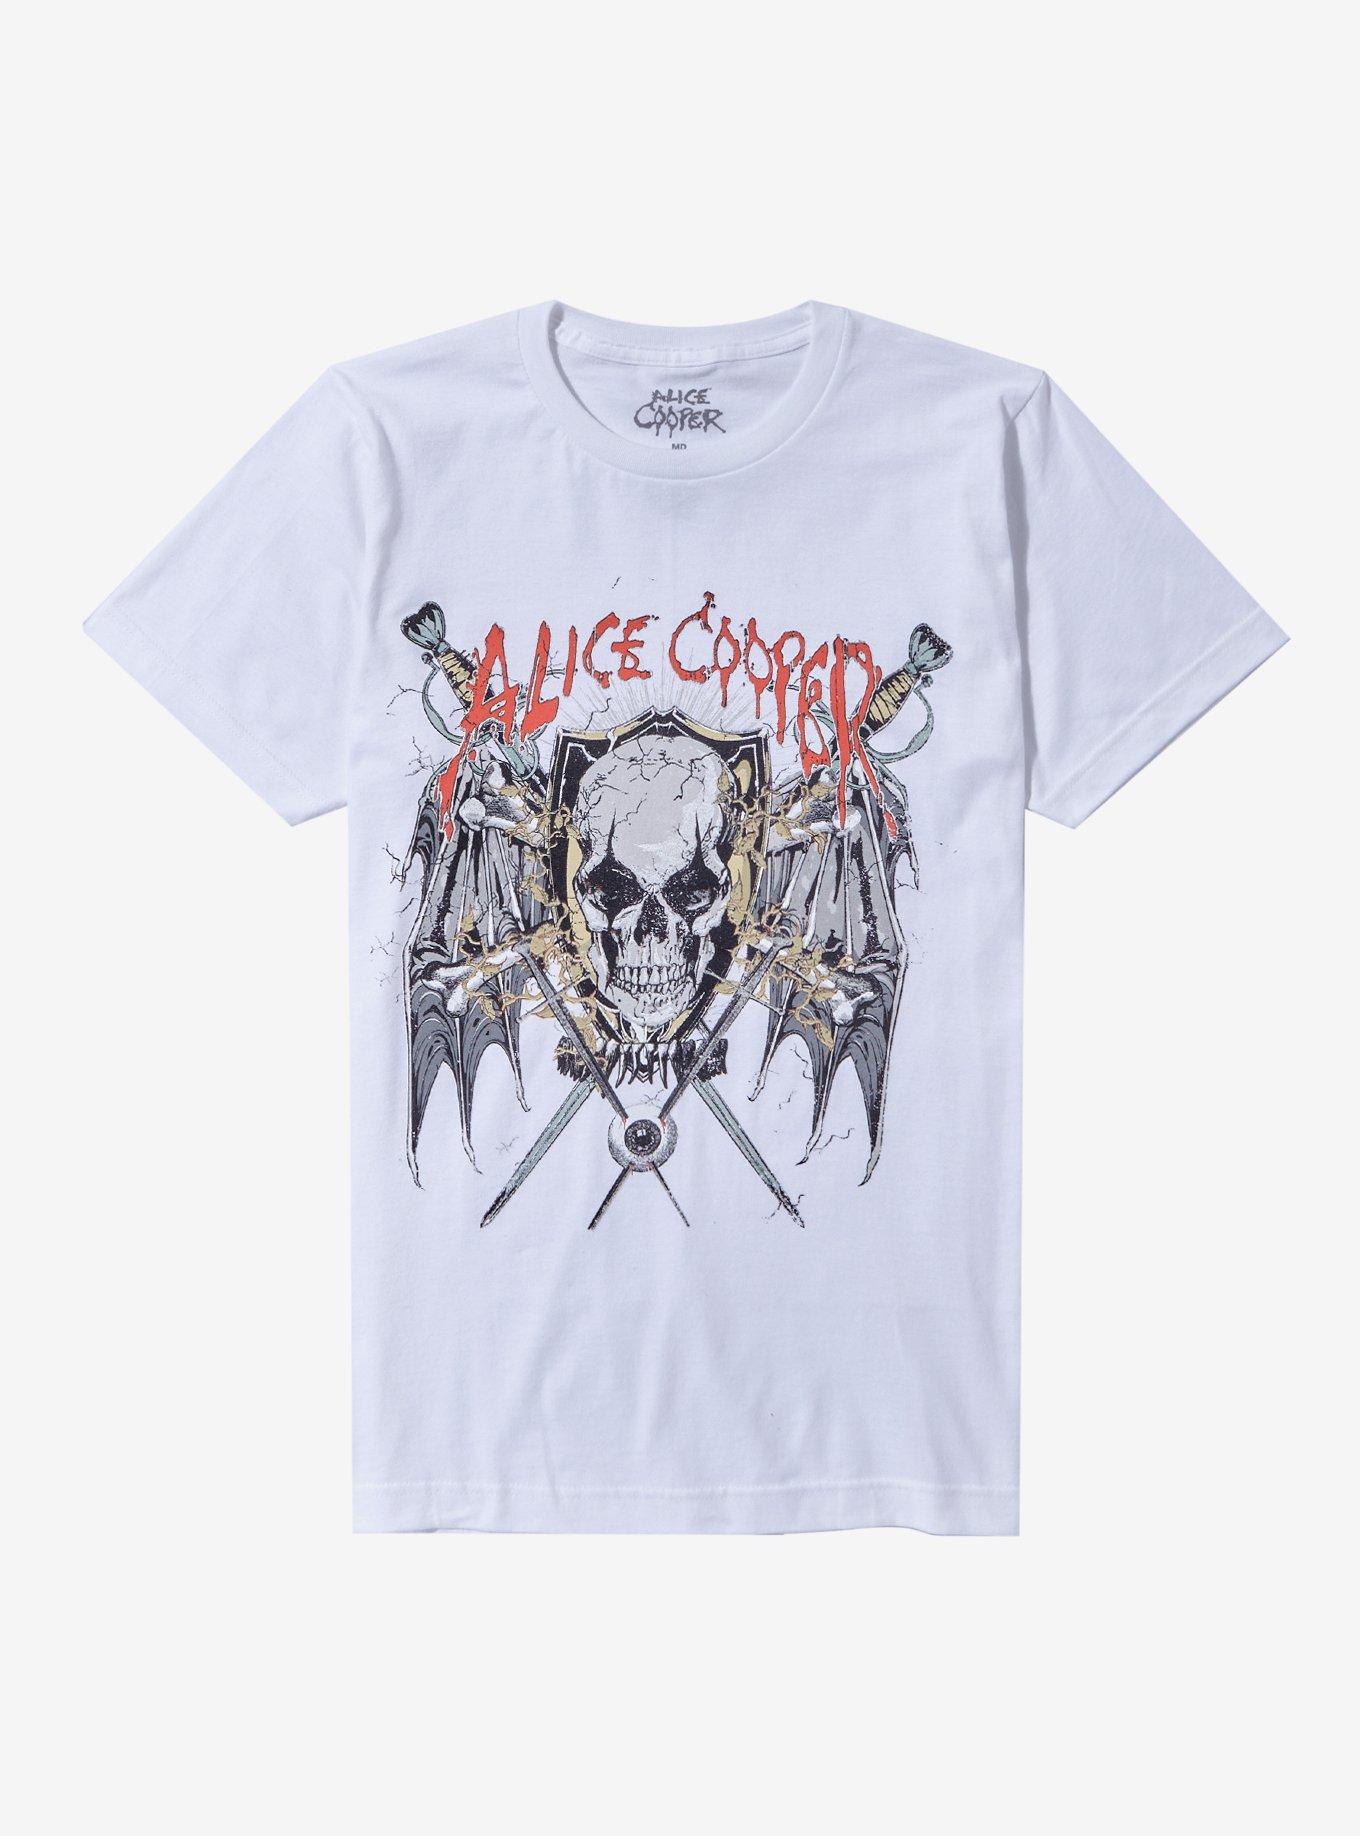 Alice Cooper Winged Skull & Blades Boyfriend Fit Girls T-Shirt